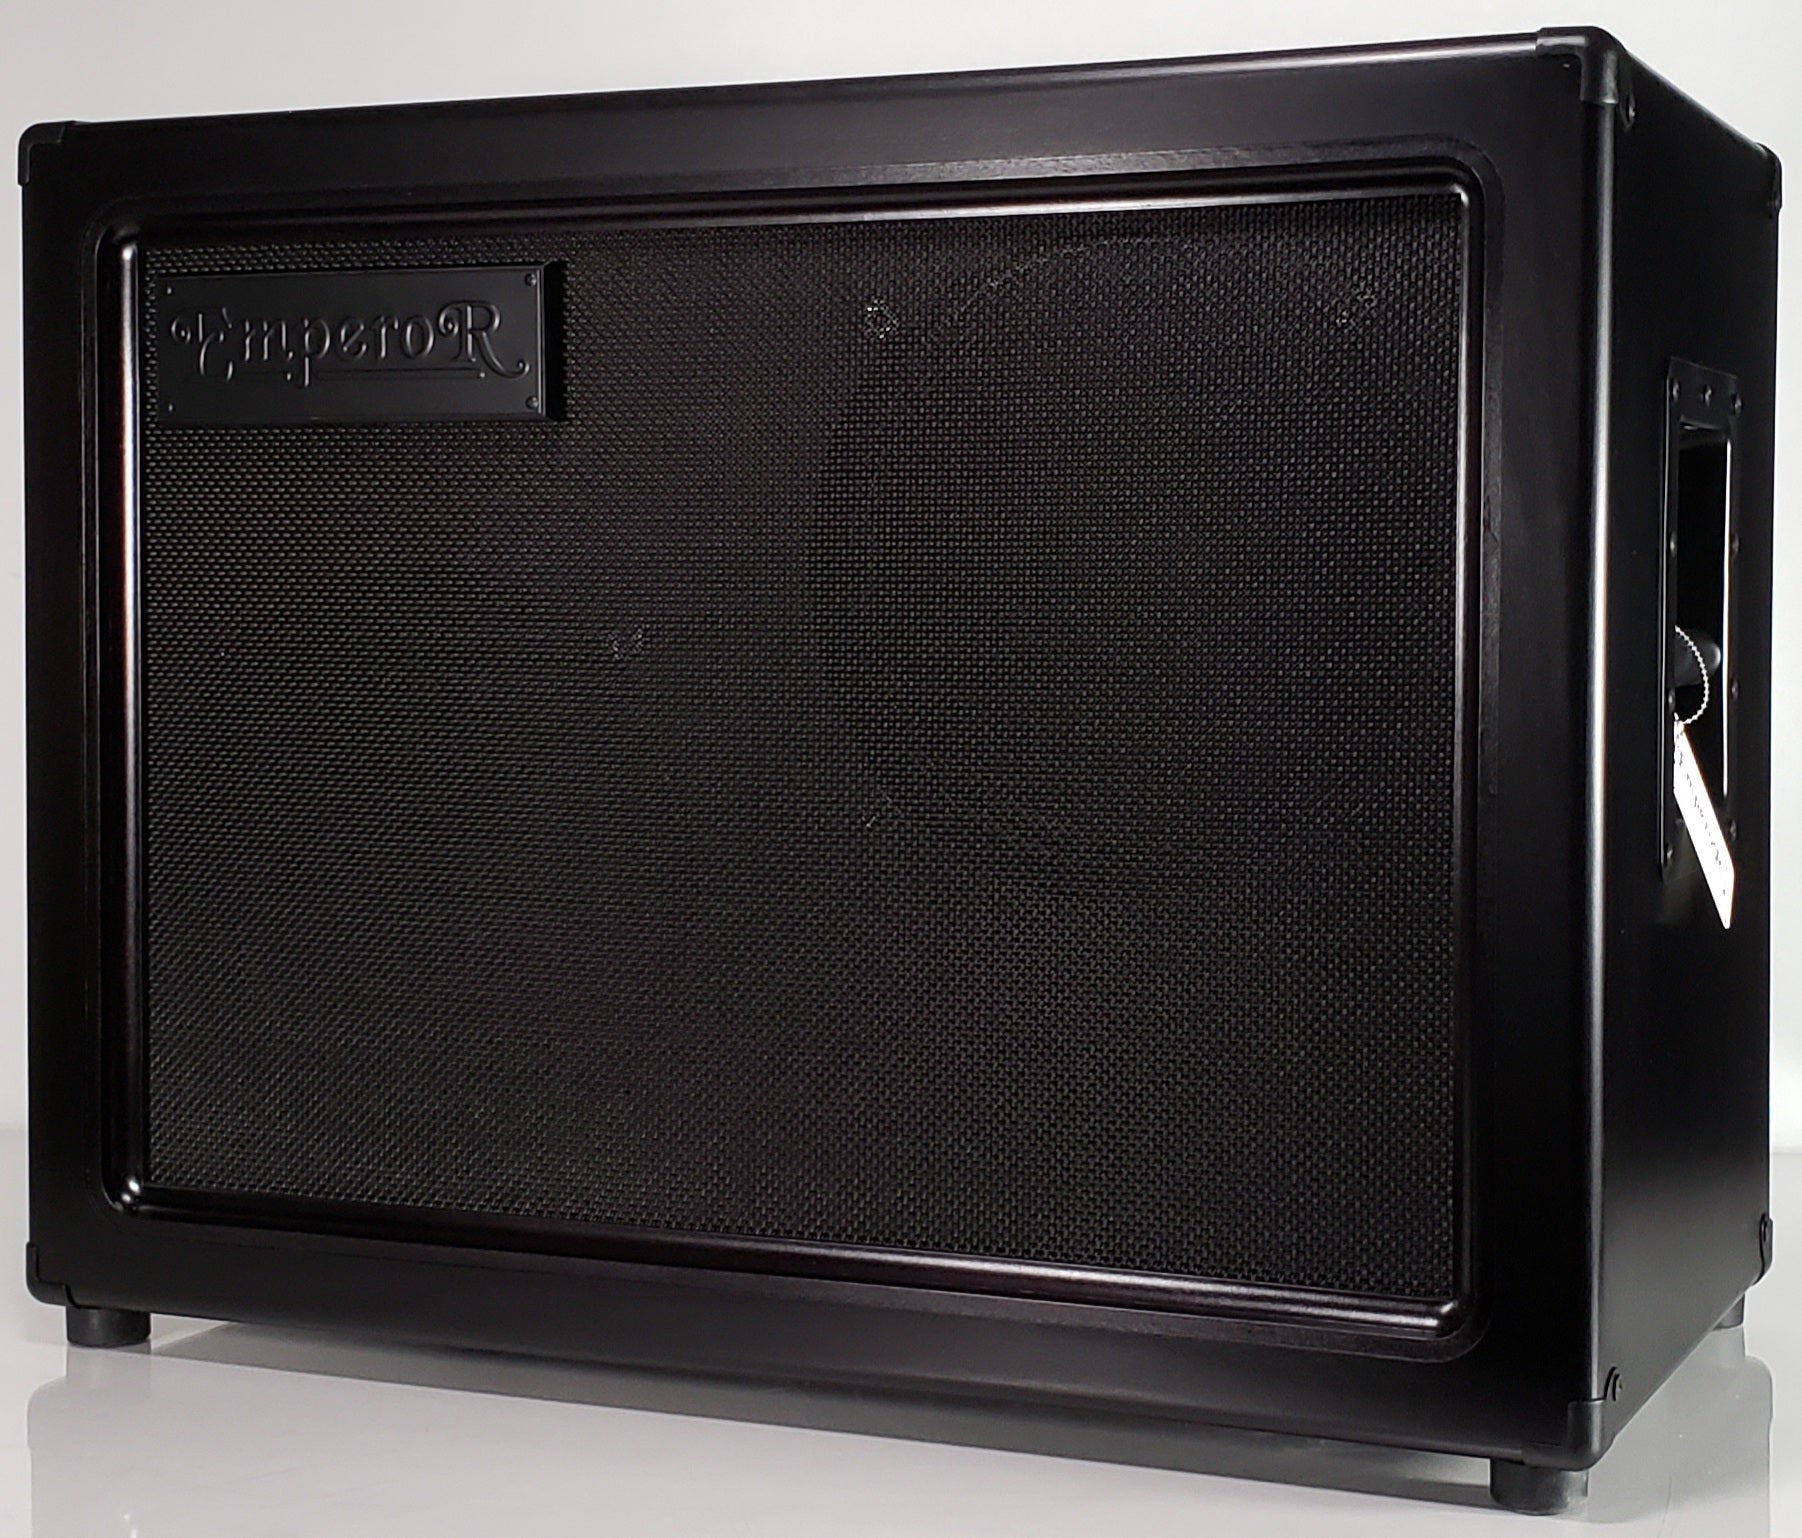 Blackened Unloaded Guitar Cabinets - Emperor Cabinets